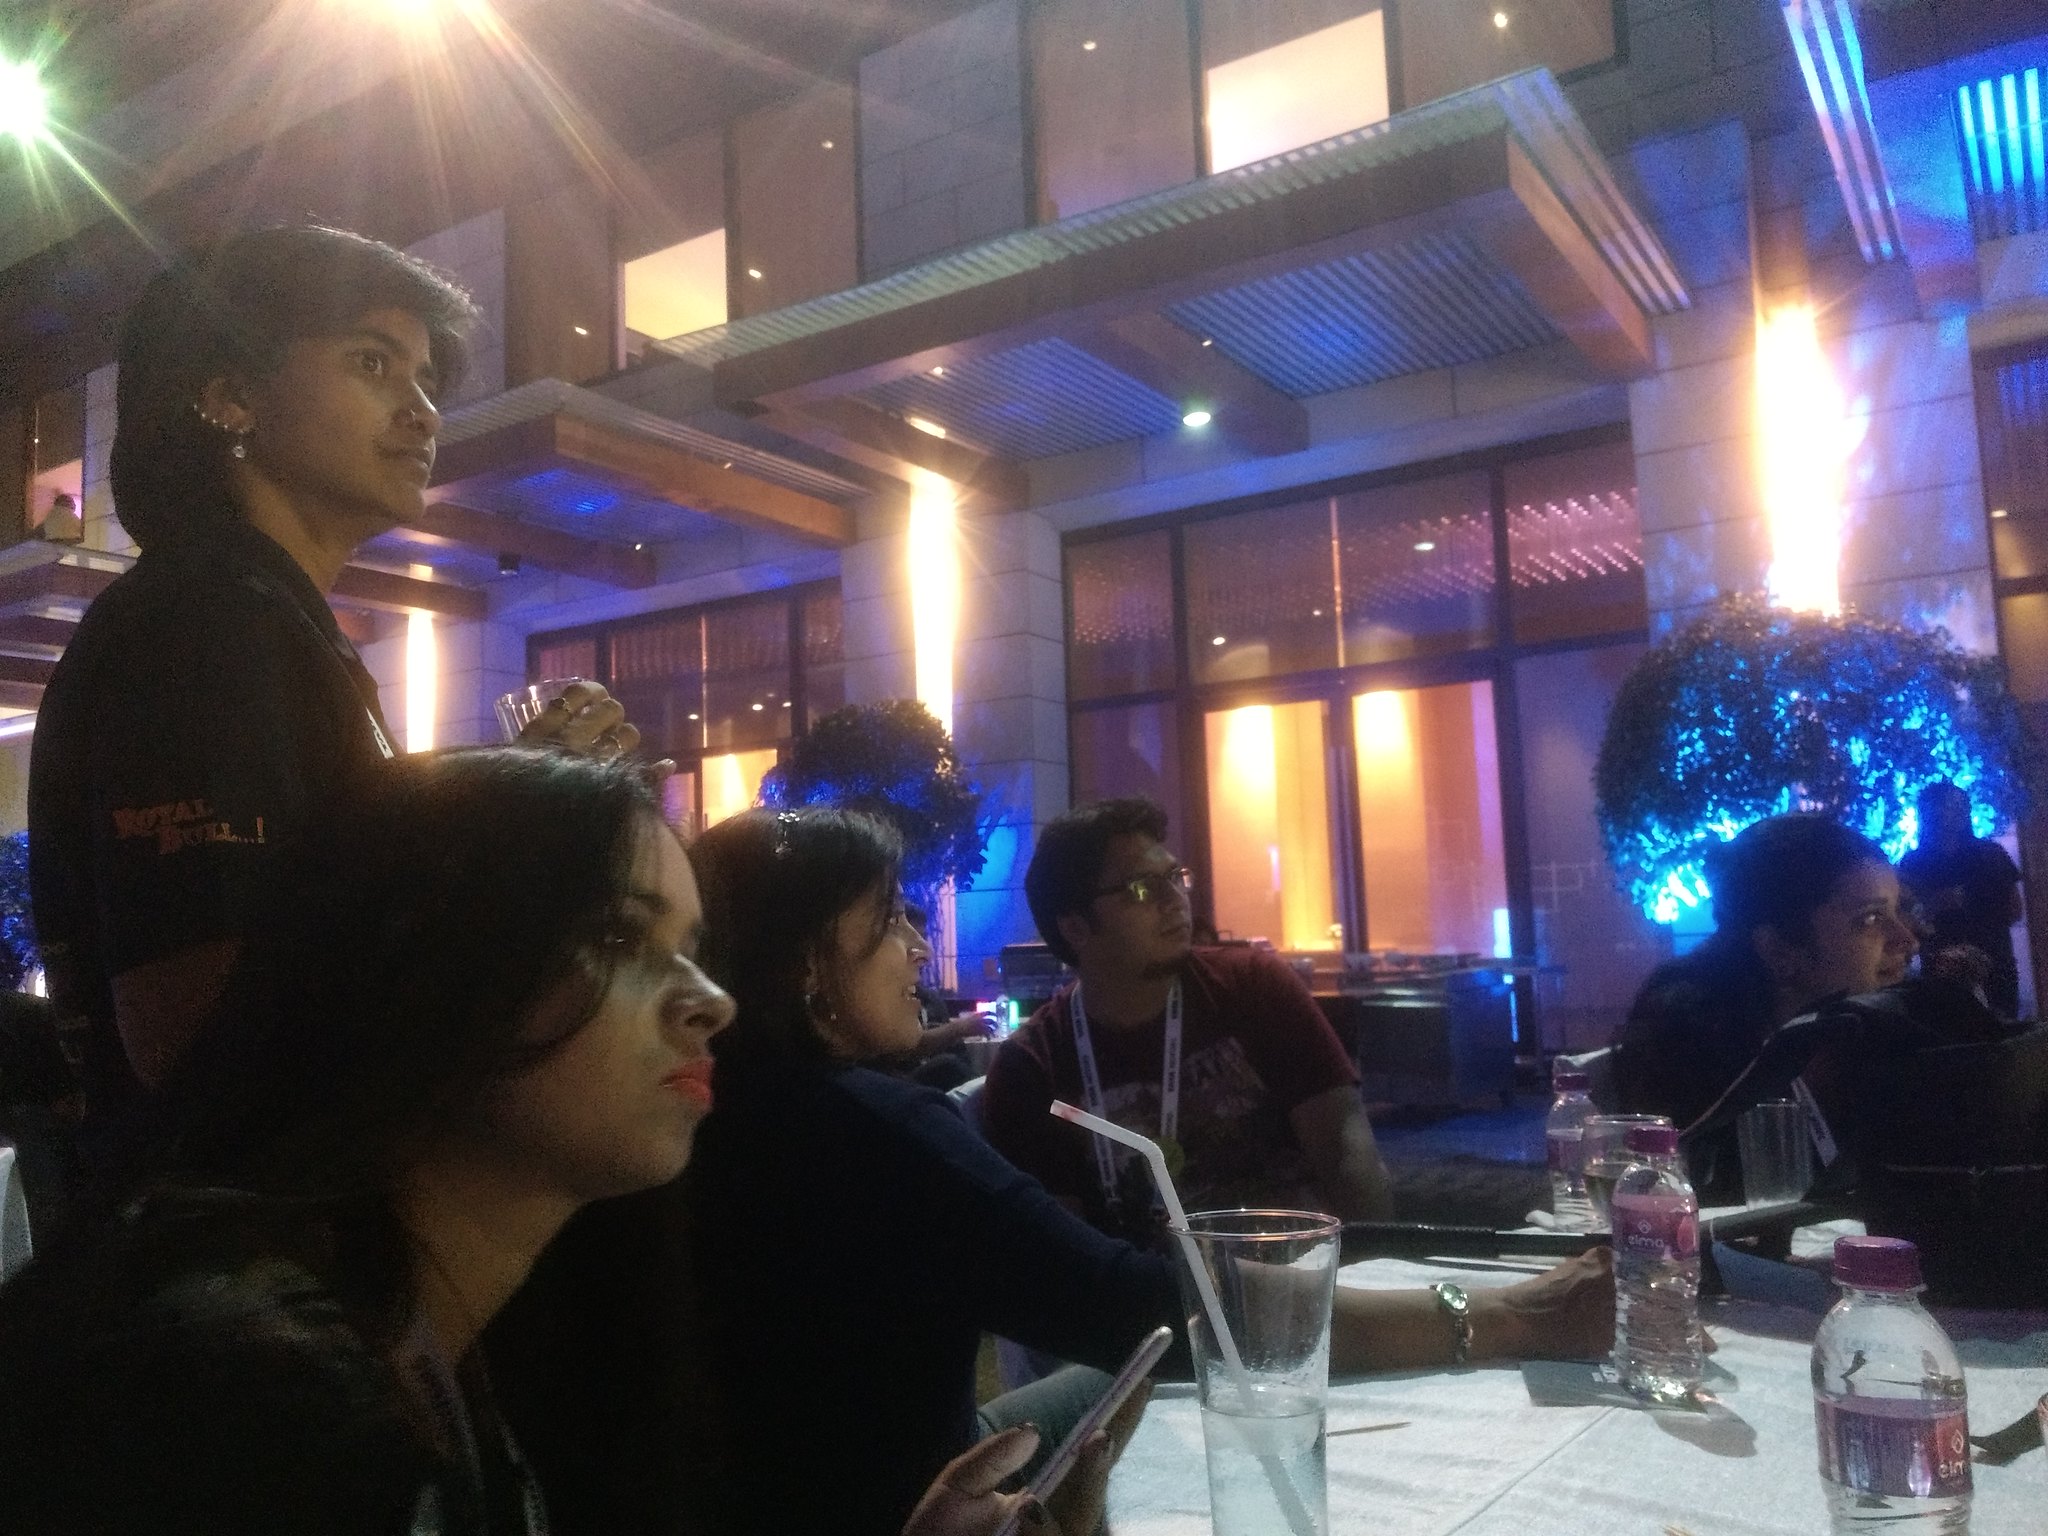 Enjoying the evening, Novotel - Hyderabad indiblogger